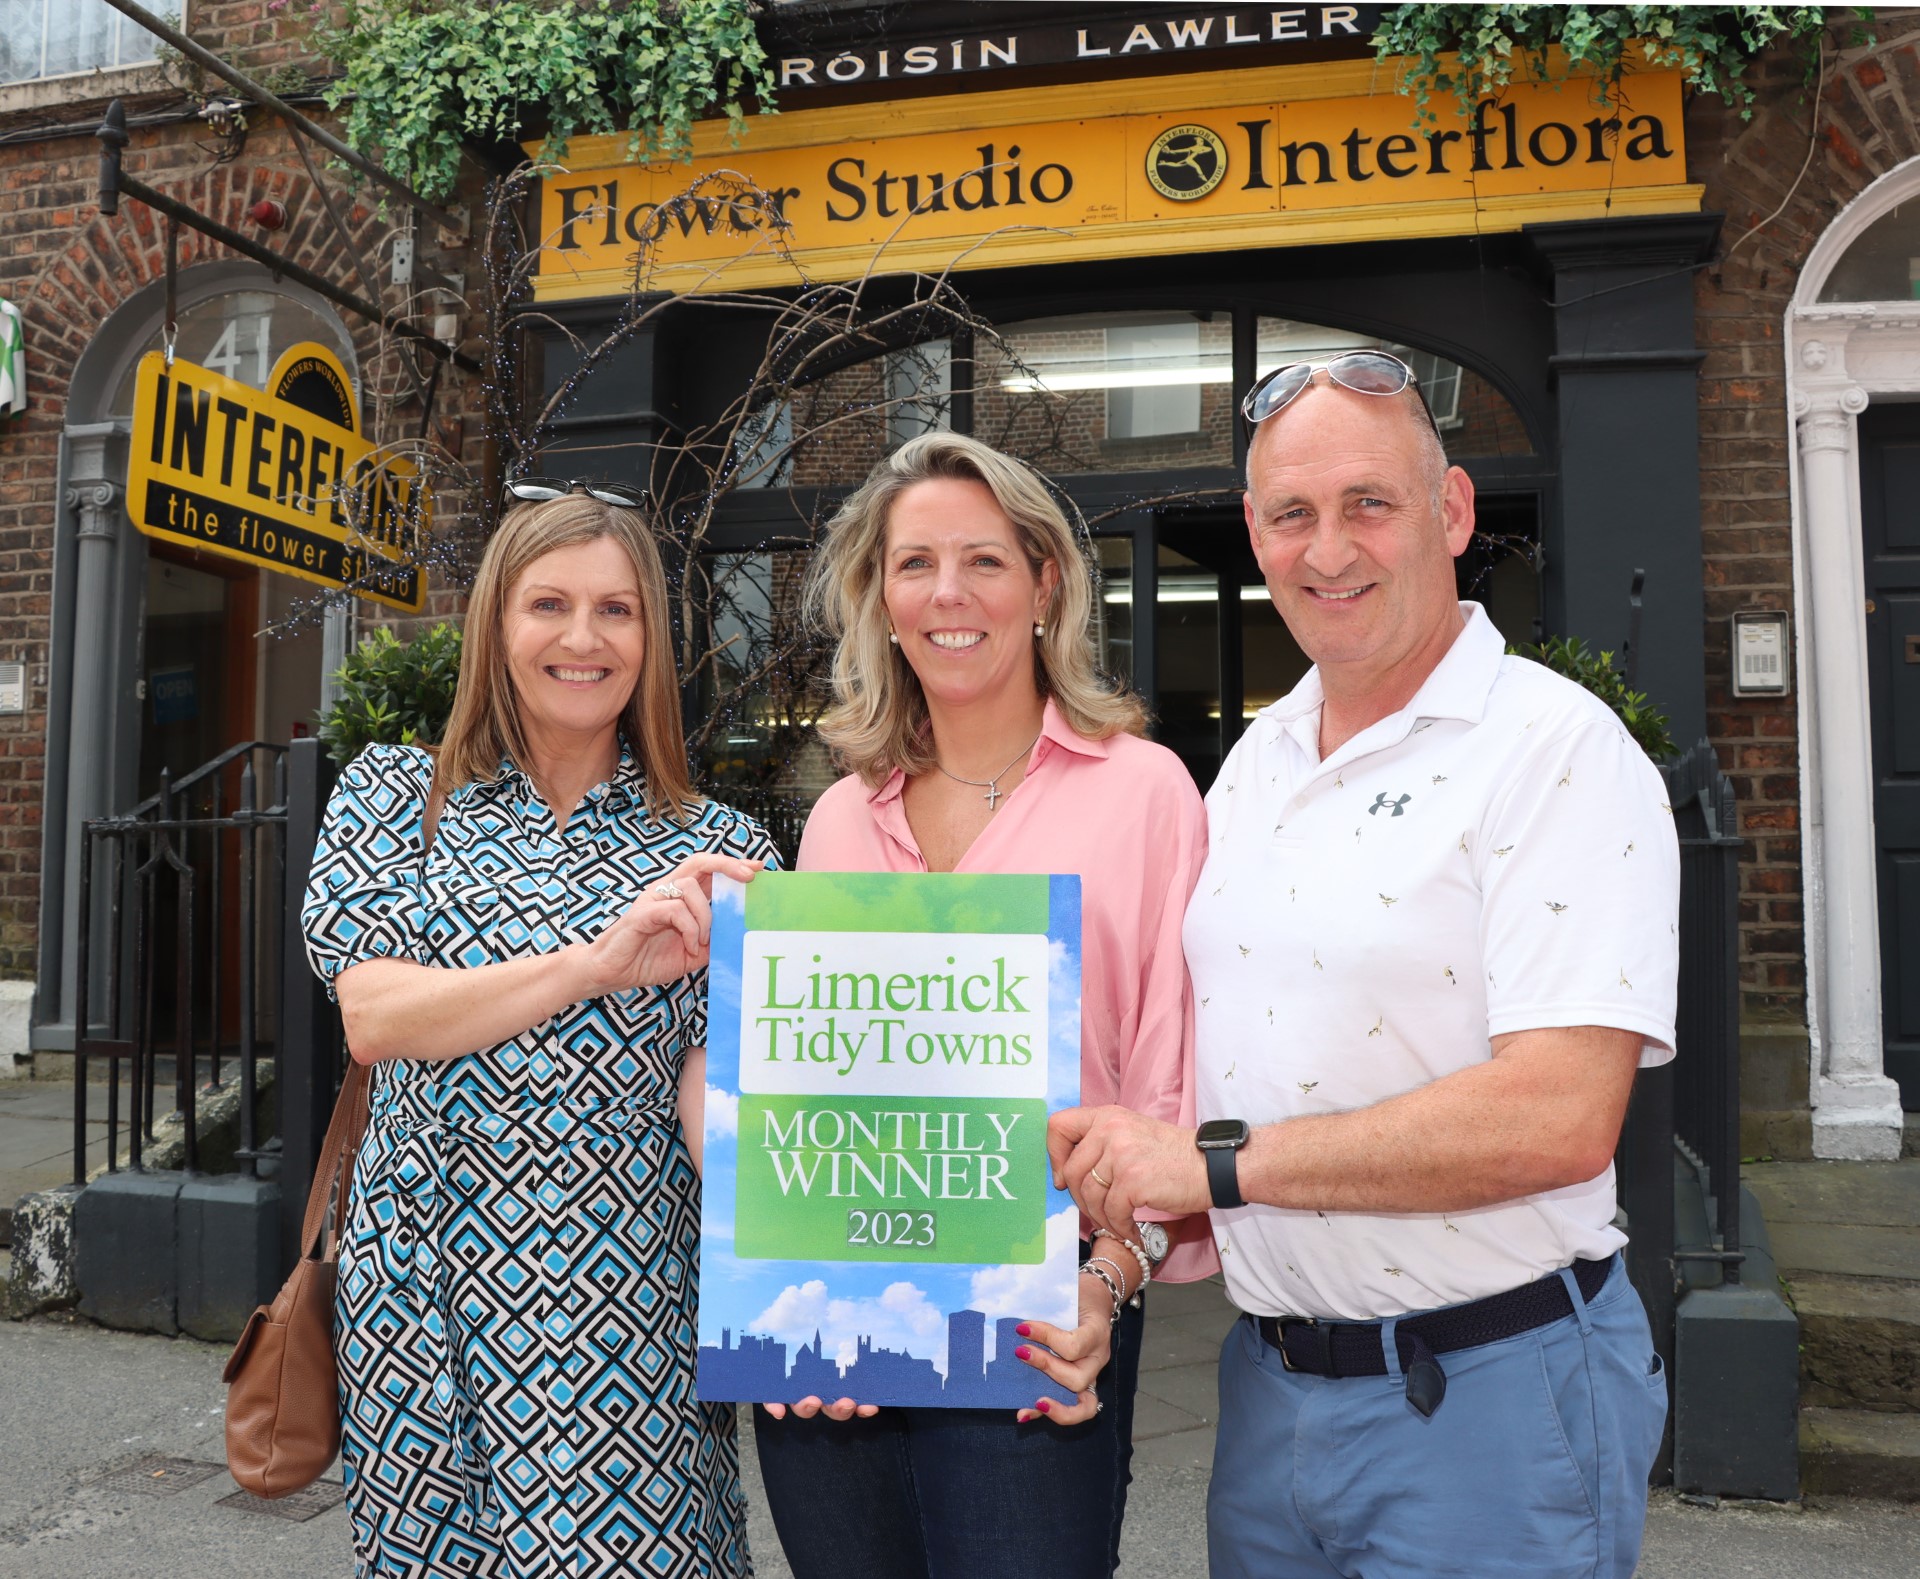 Flower Studio Limerick City Tidy Towns Award winner May-June